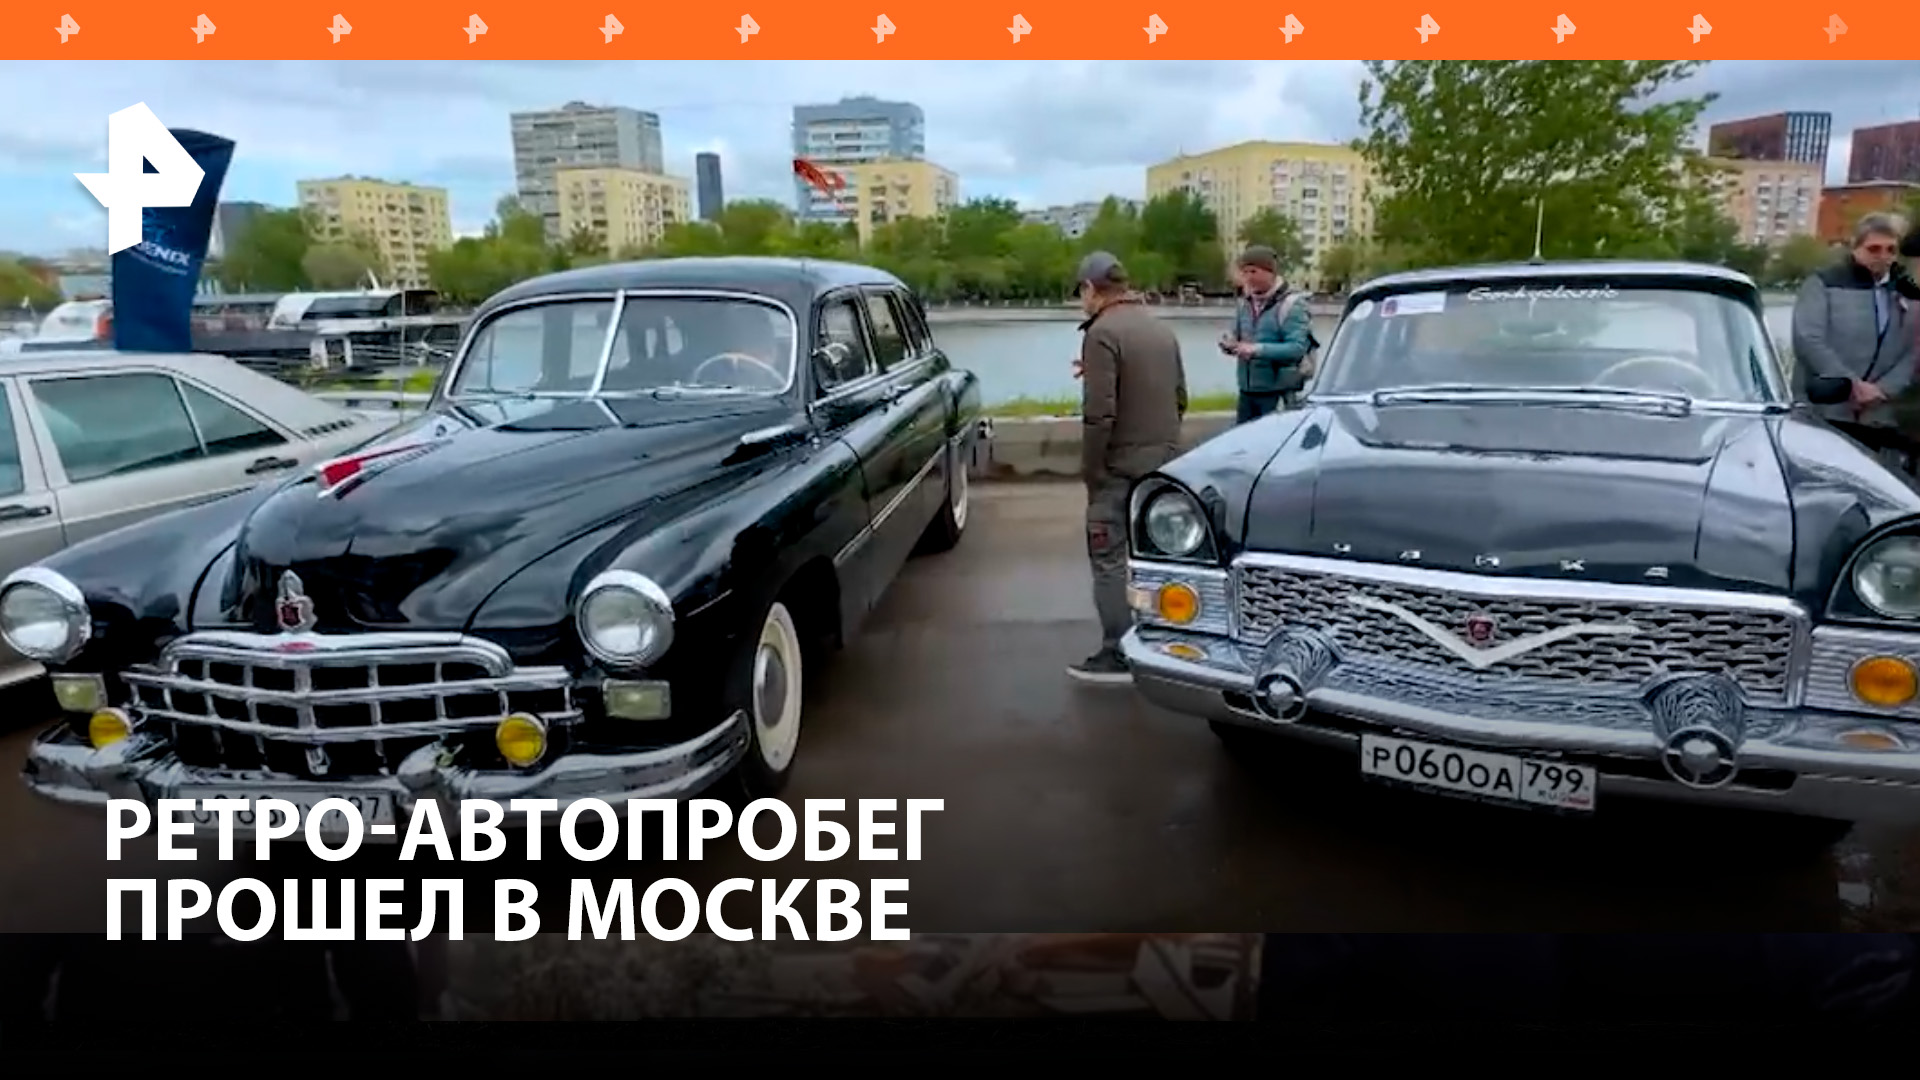 Любители ретро-машин устроили автопробег в Москве / РЕН Новости